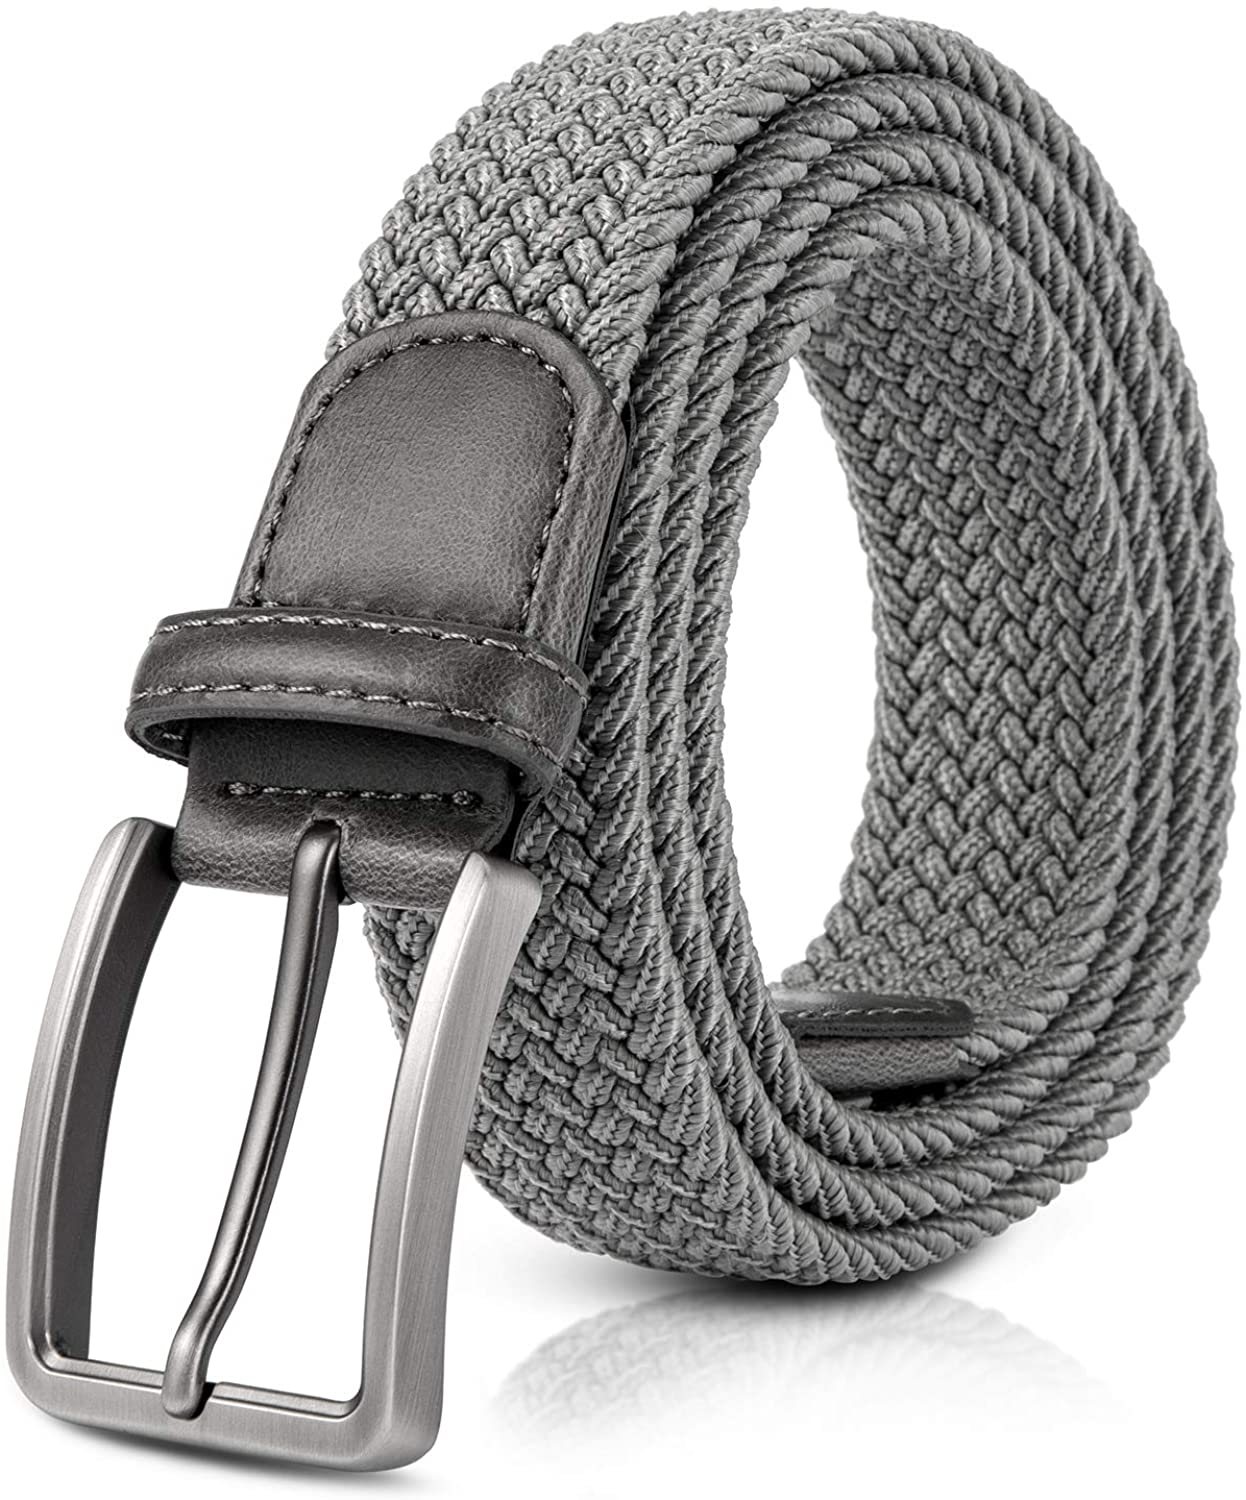 Jiguoor Braided Stretch Belt Golf Elastic Fabric Woven Belts Casual